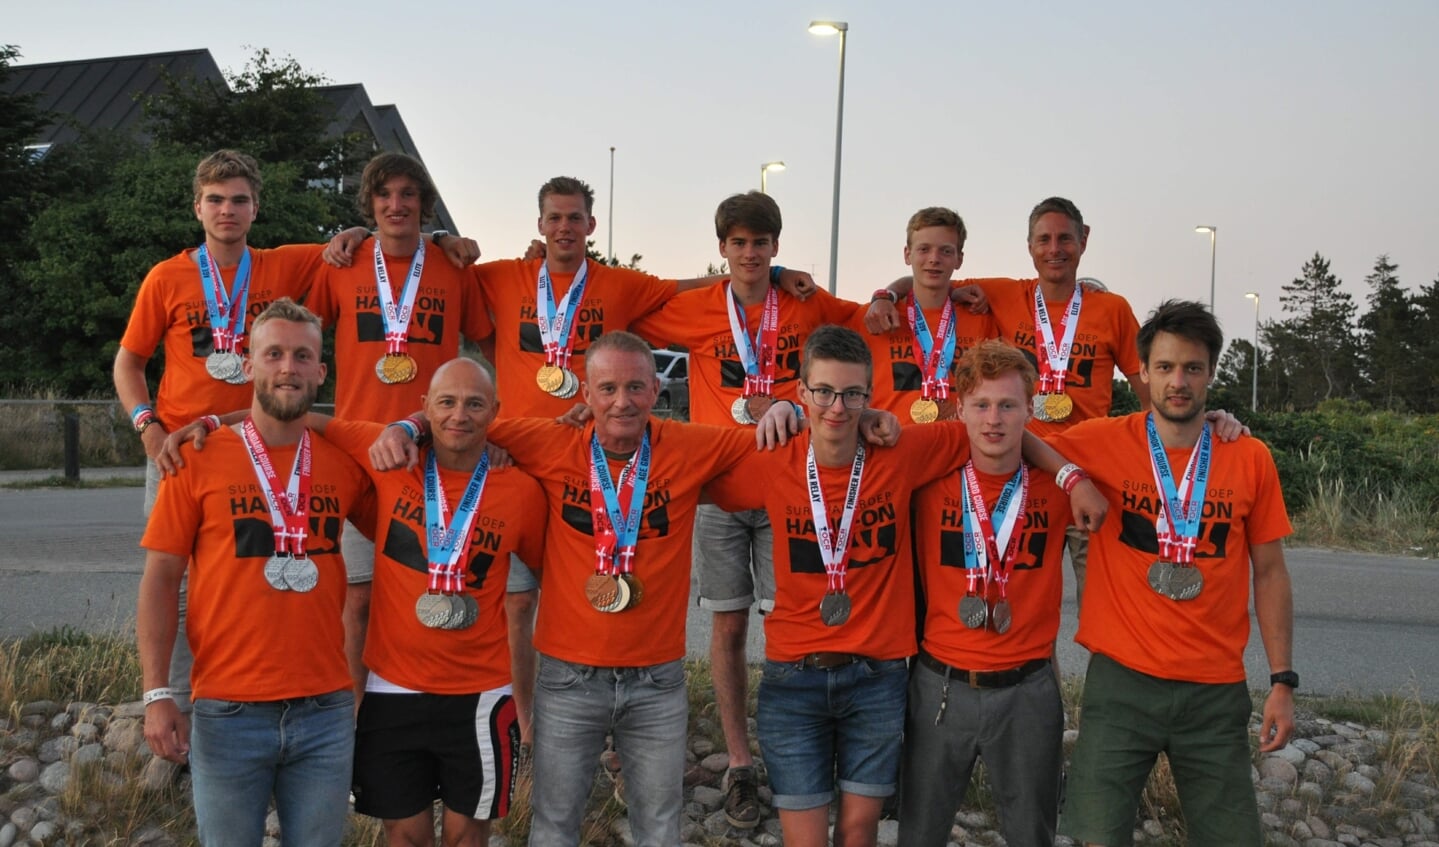 de 14 medaiile winnaars uit team Hang On the Netherlands